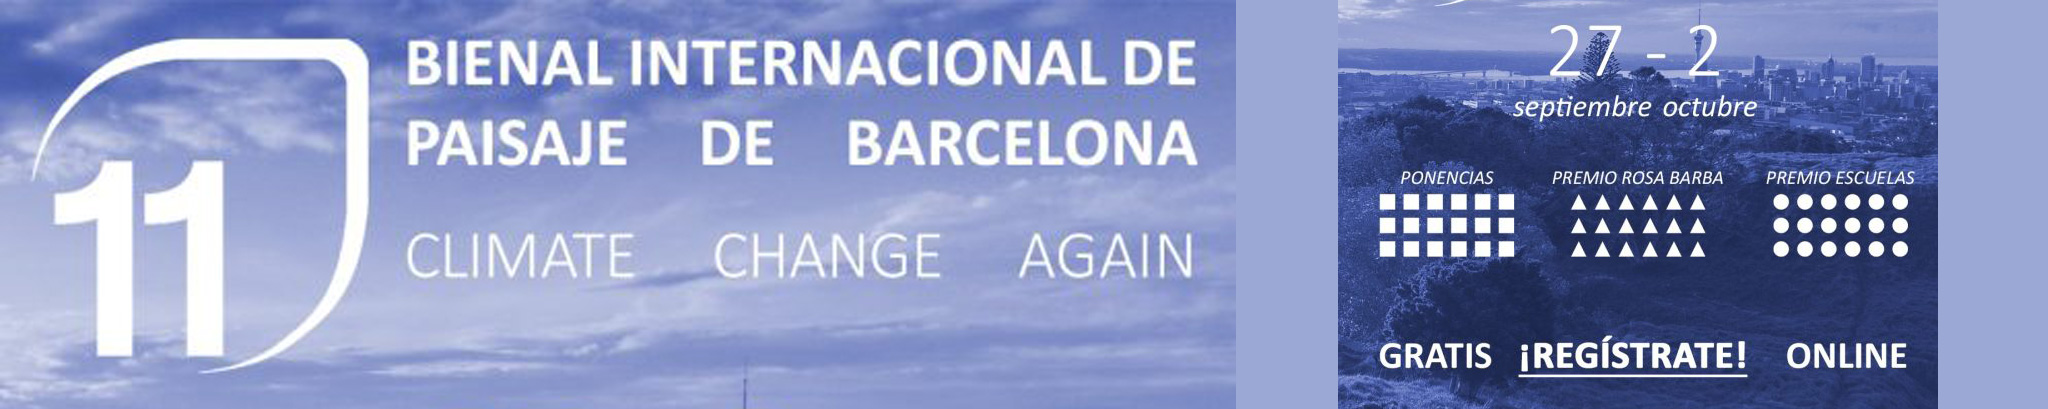 Biennale Barcellona 2021